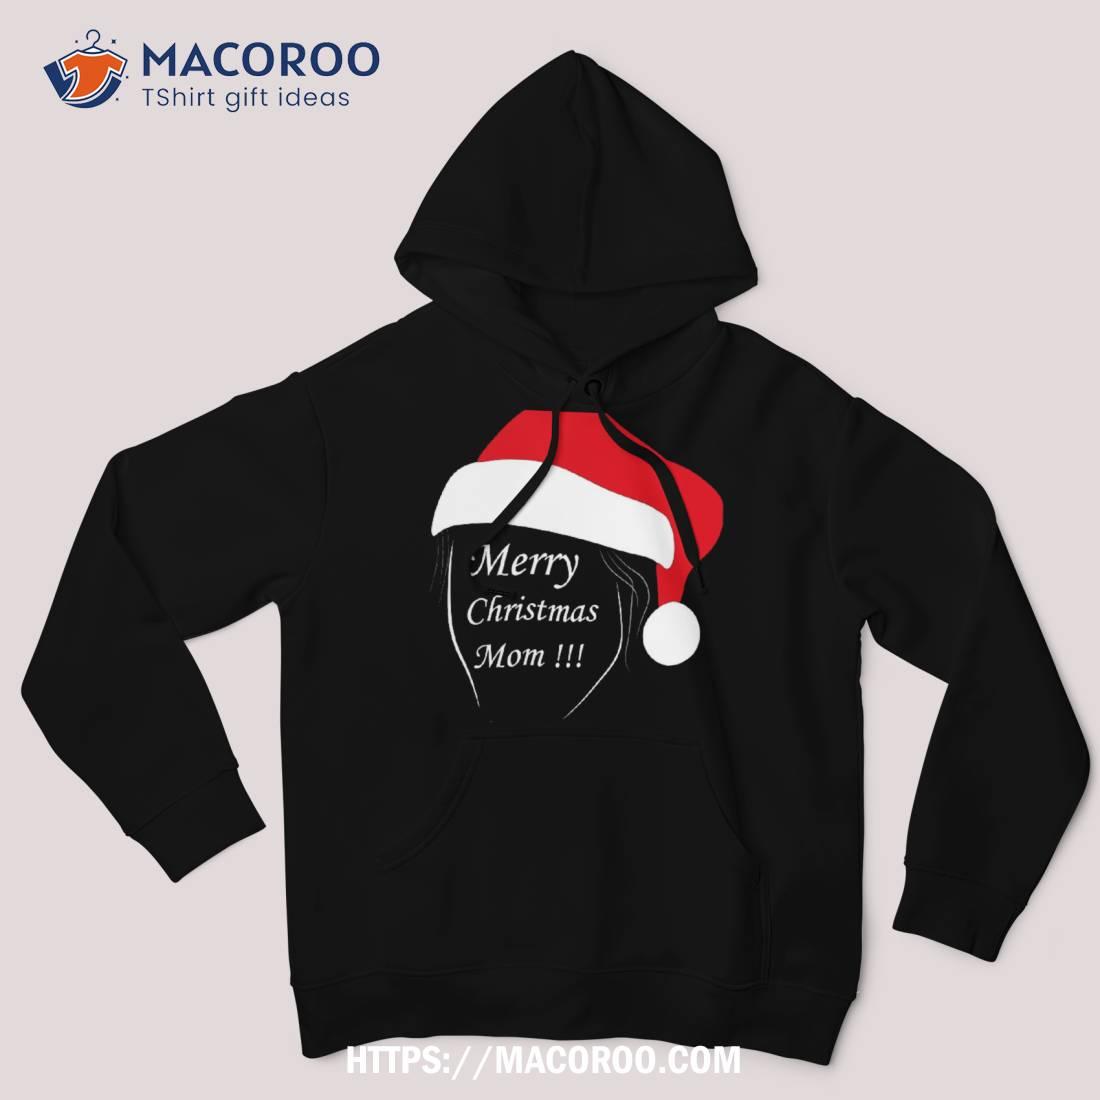 https://images.macoroo.com/wp-content/uploads/2023/08/merry-christmas-mom-shirt-sentimental-christmas-gifts-for-mom-hoodie.jpg